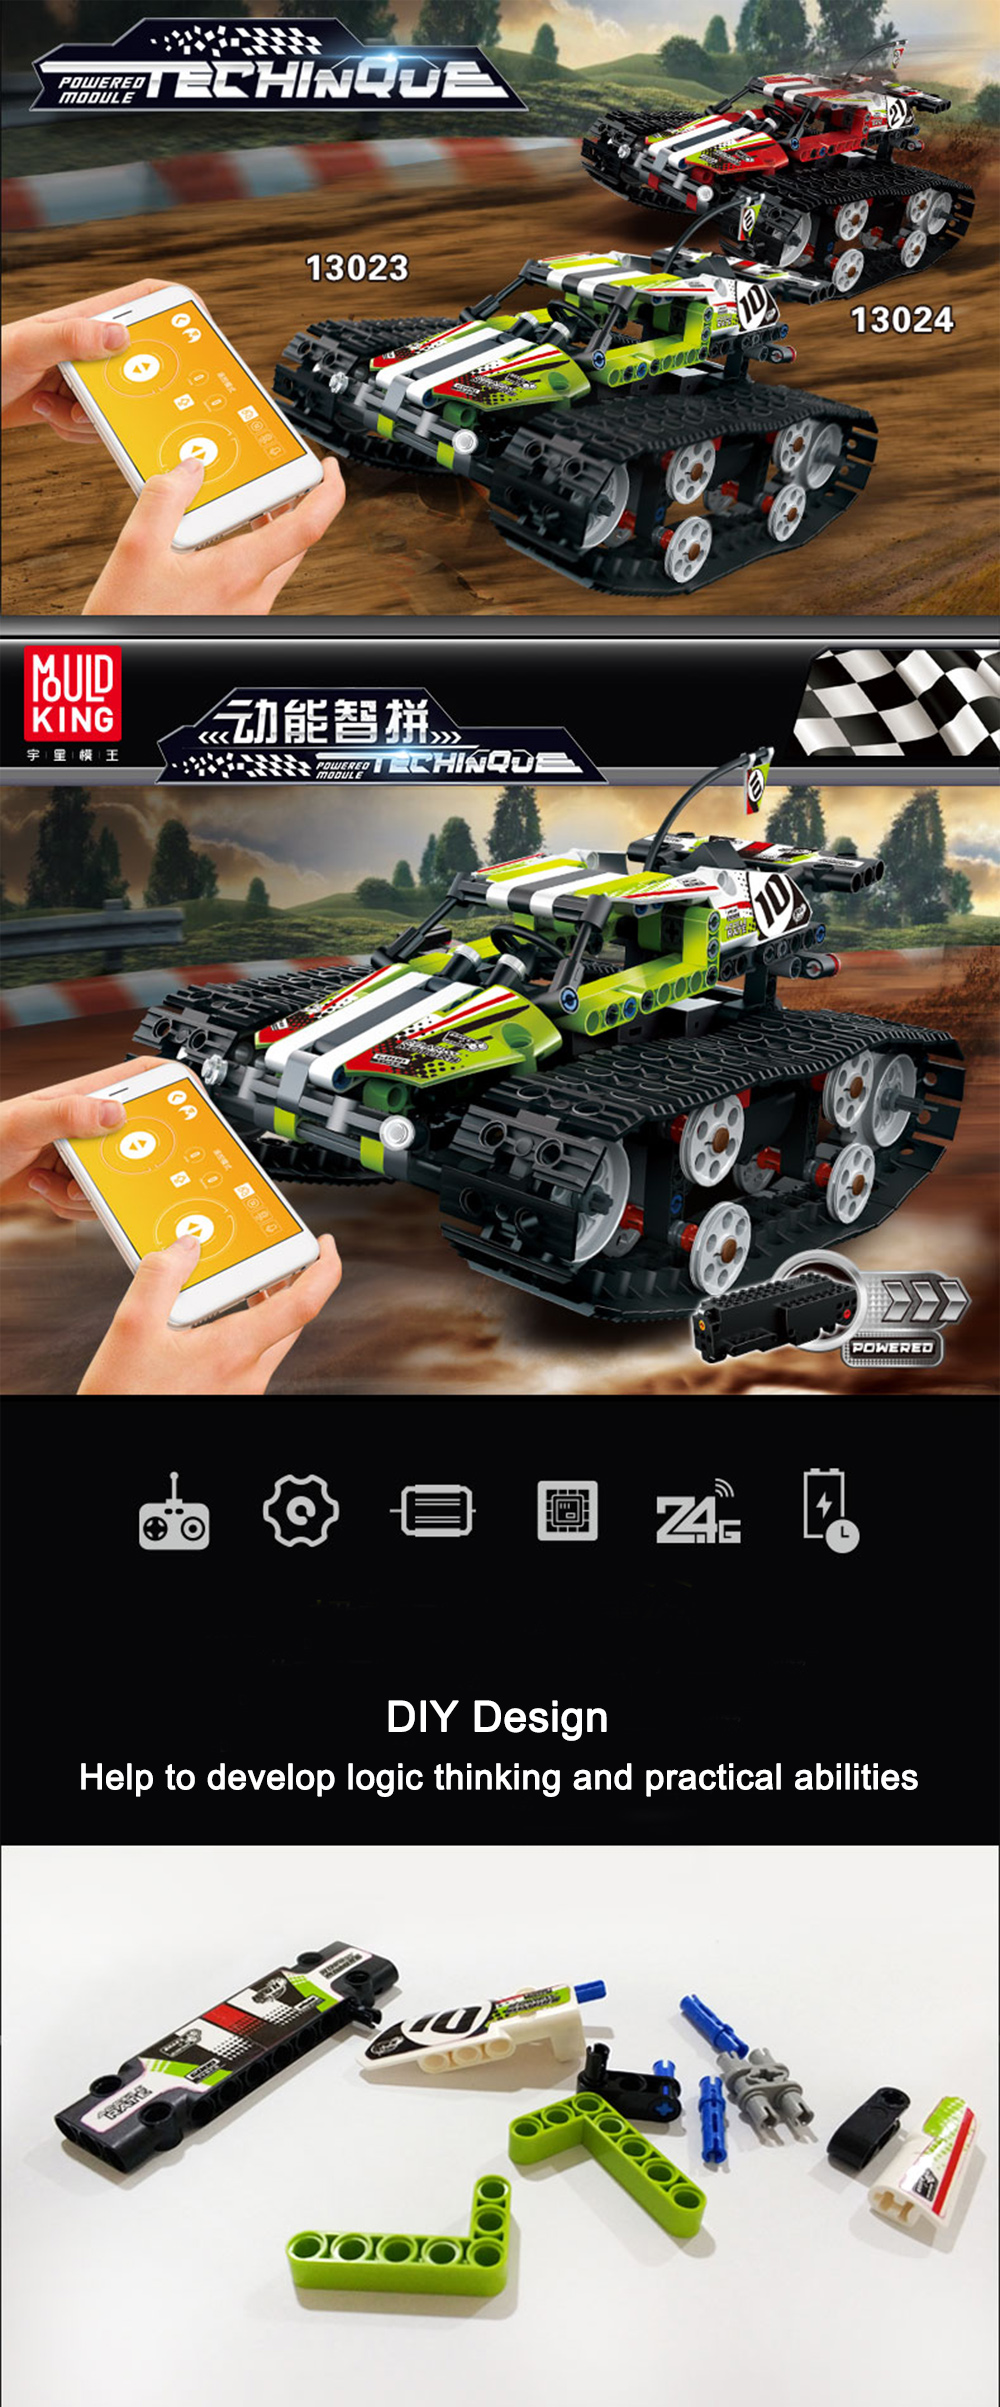 Mould-King-DIY-Smart-RC-Robot-Car-Programmable-Block-Building-Bluetooth-APP24G-Stick-Control-Assembl-1631263-1